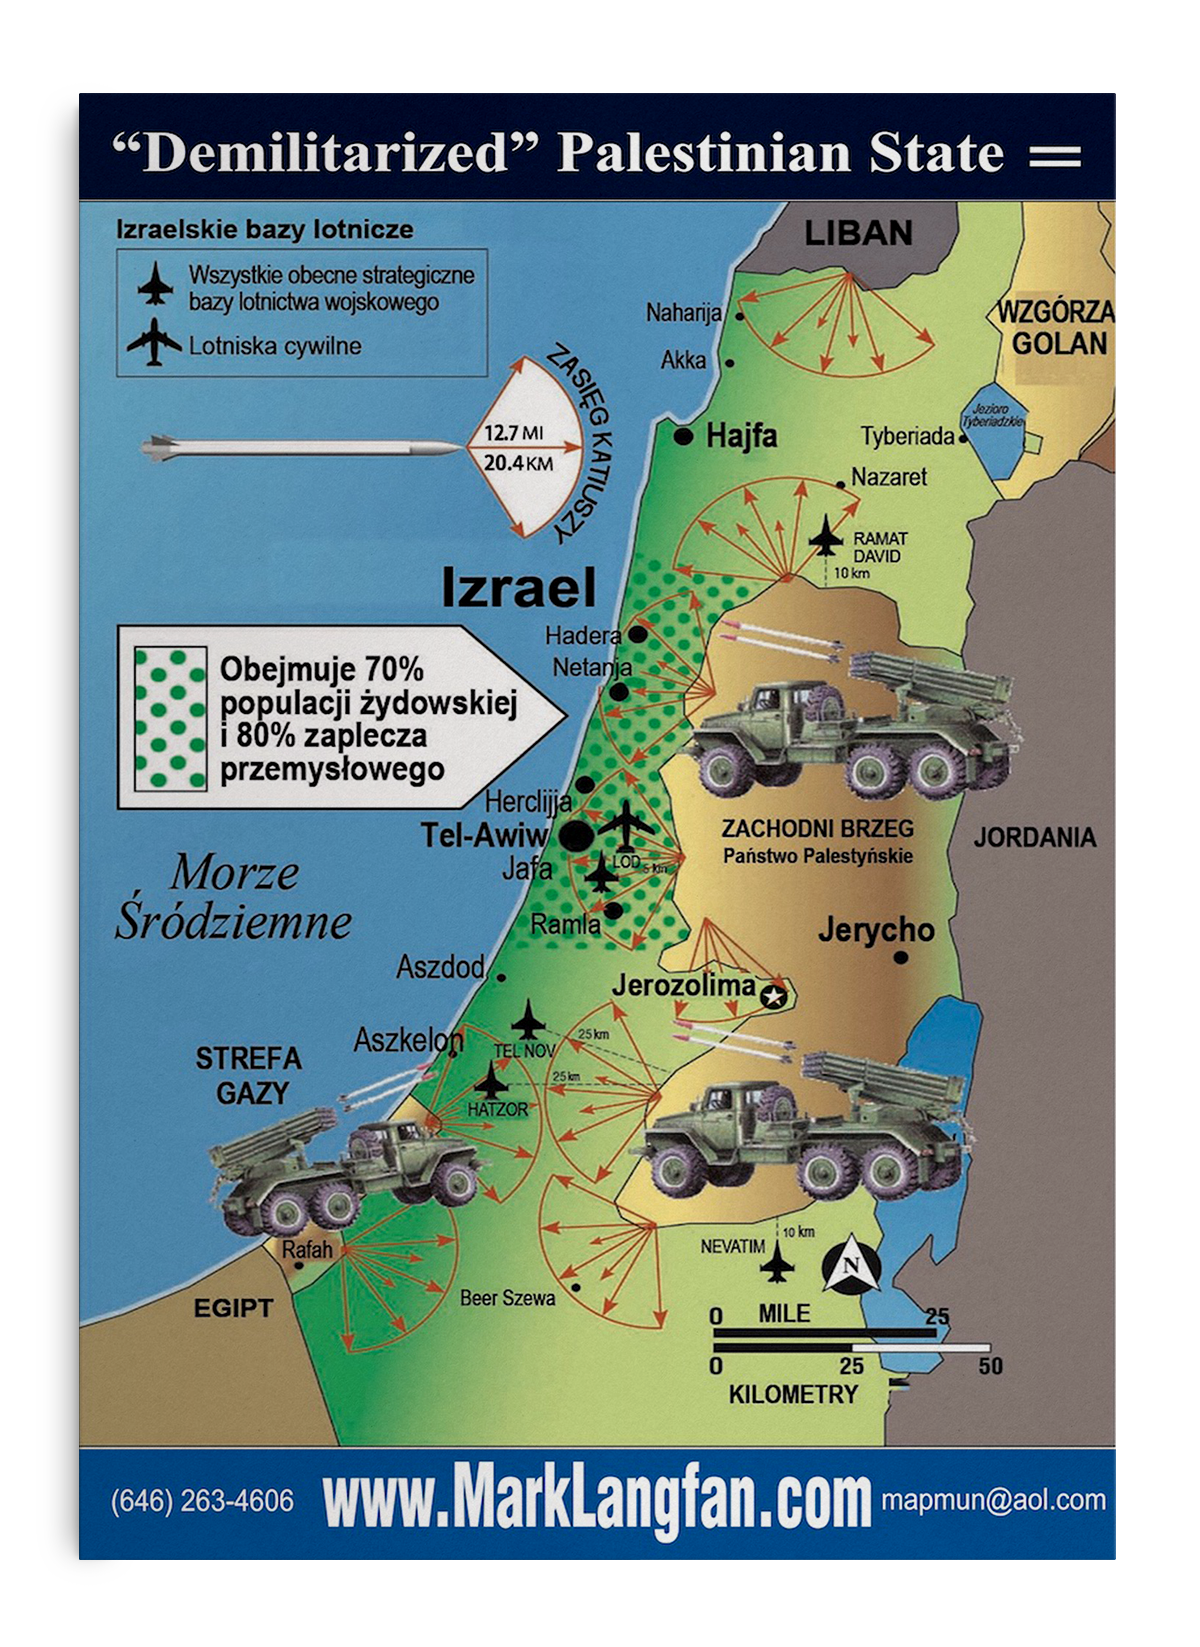 demilitarized palestinian state polish